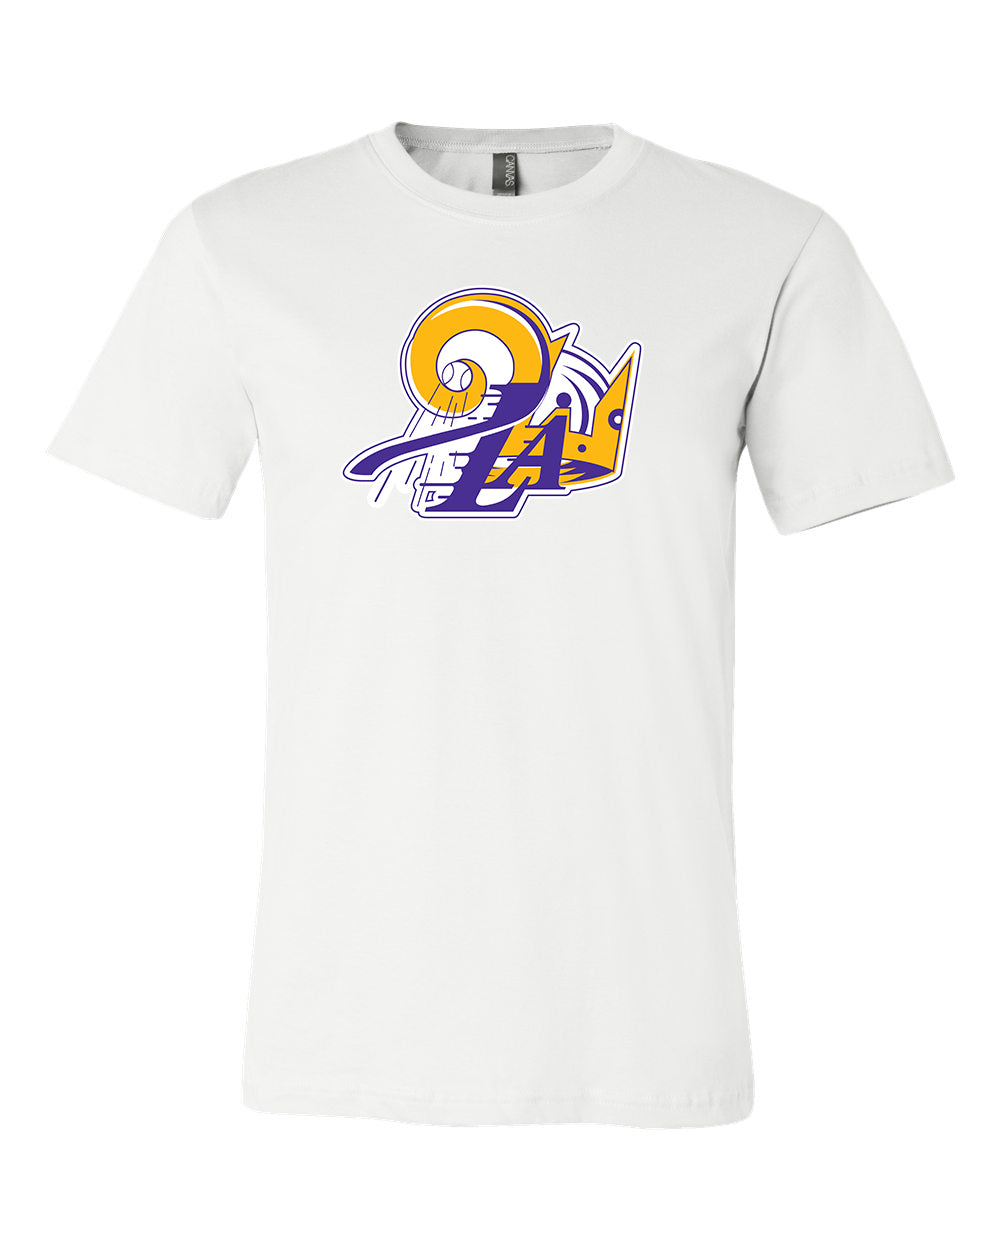 Los Angeles Dodgers Rams Lakers Kings signatures shirt